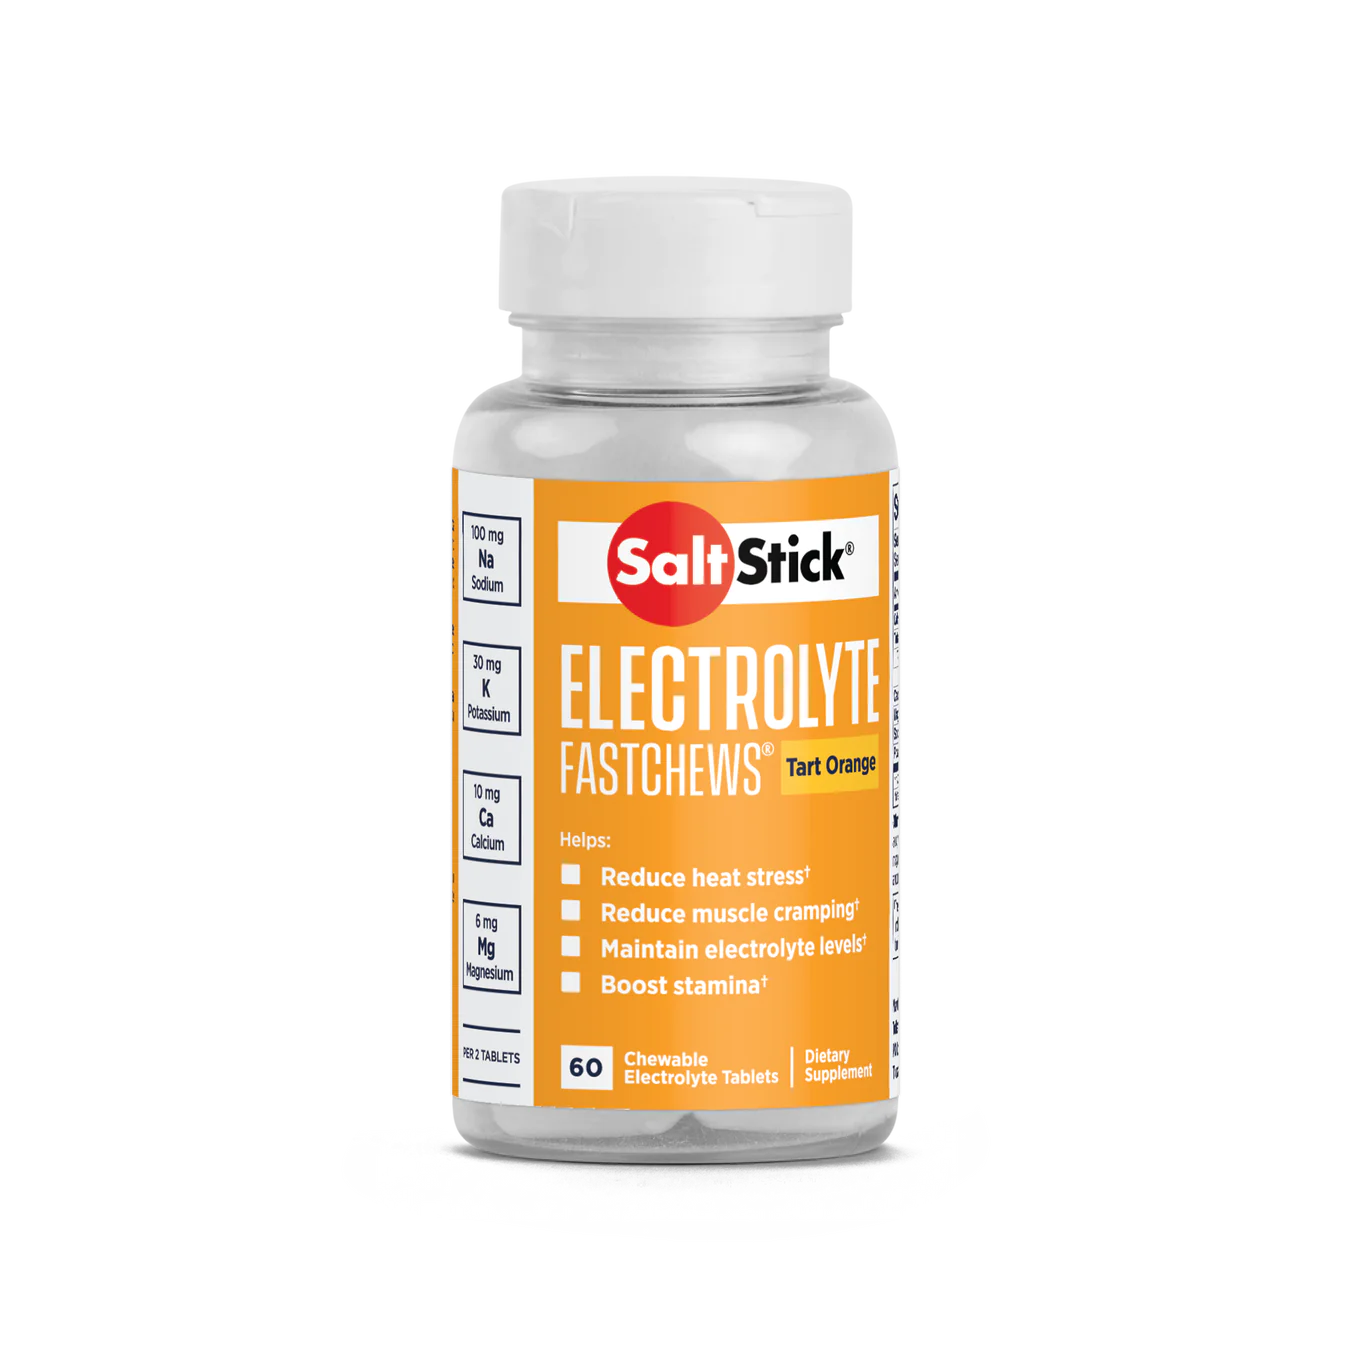 SaltStick Electrolyte FastChews Orange 60ct - 03-1060